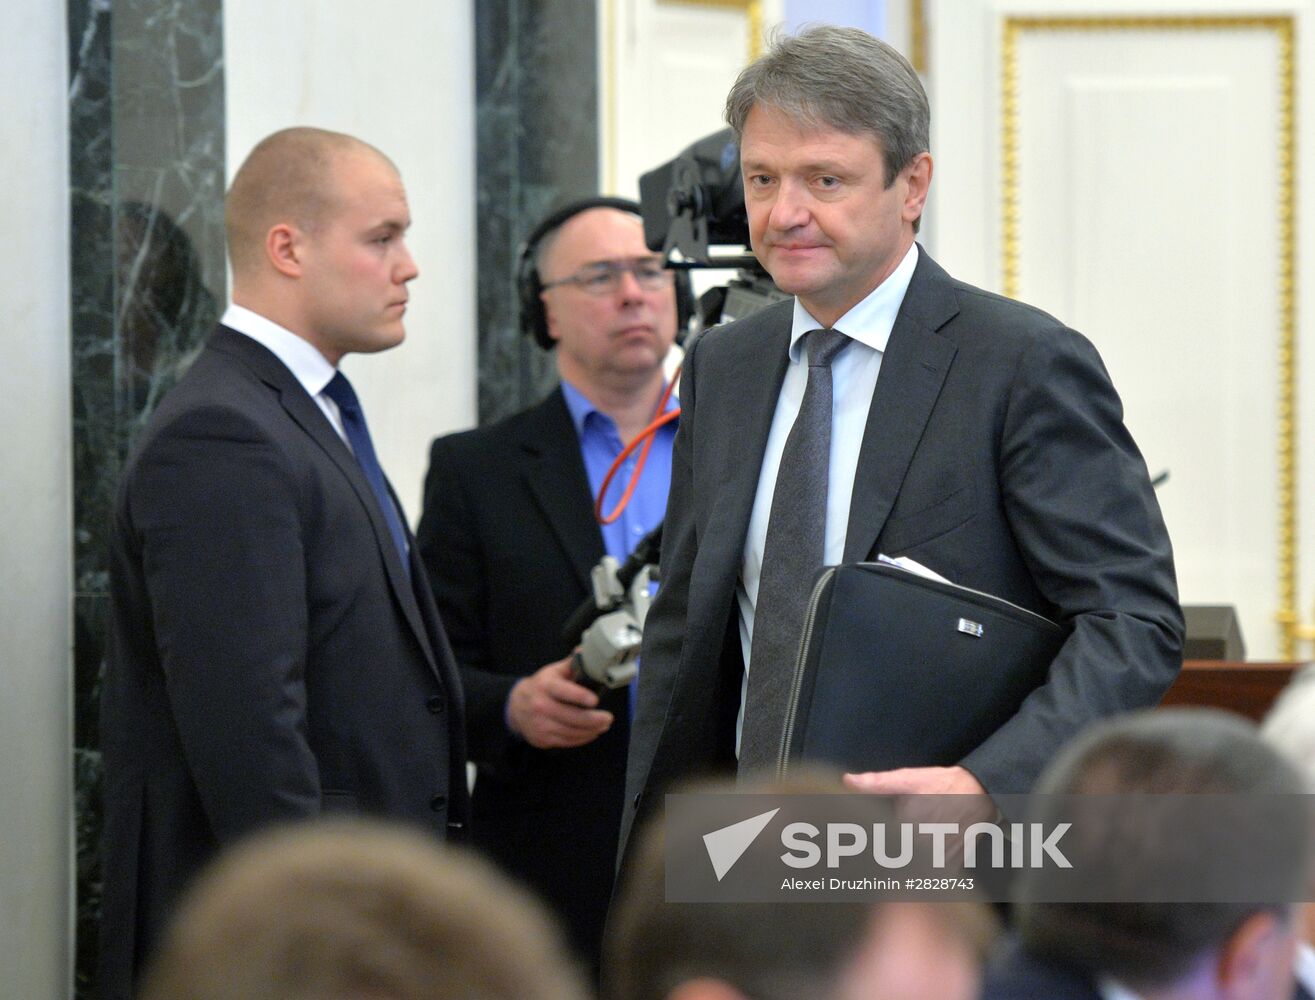 President Vladimir Putin holds regular meeting with Government members